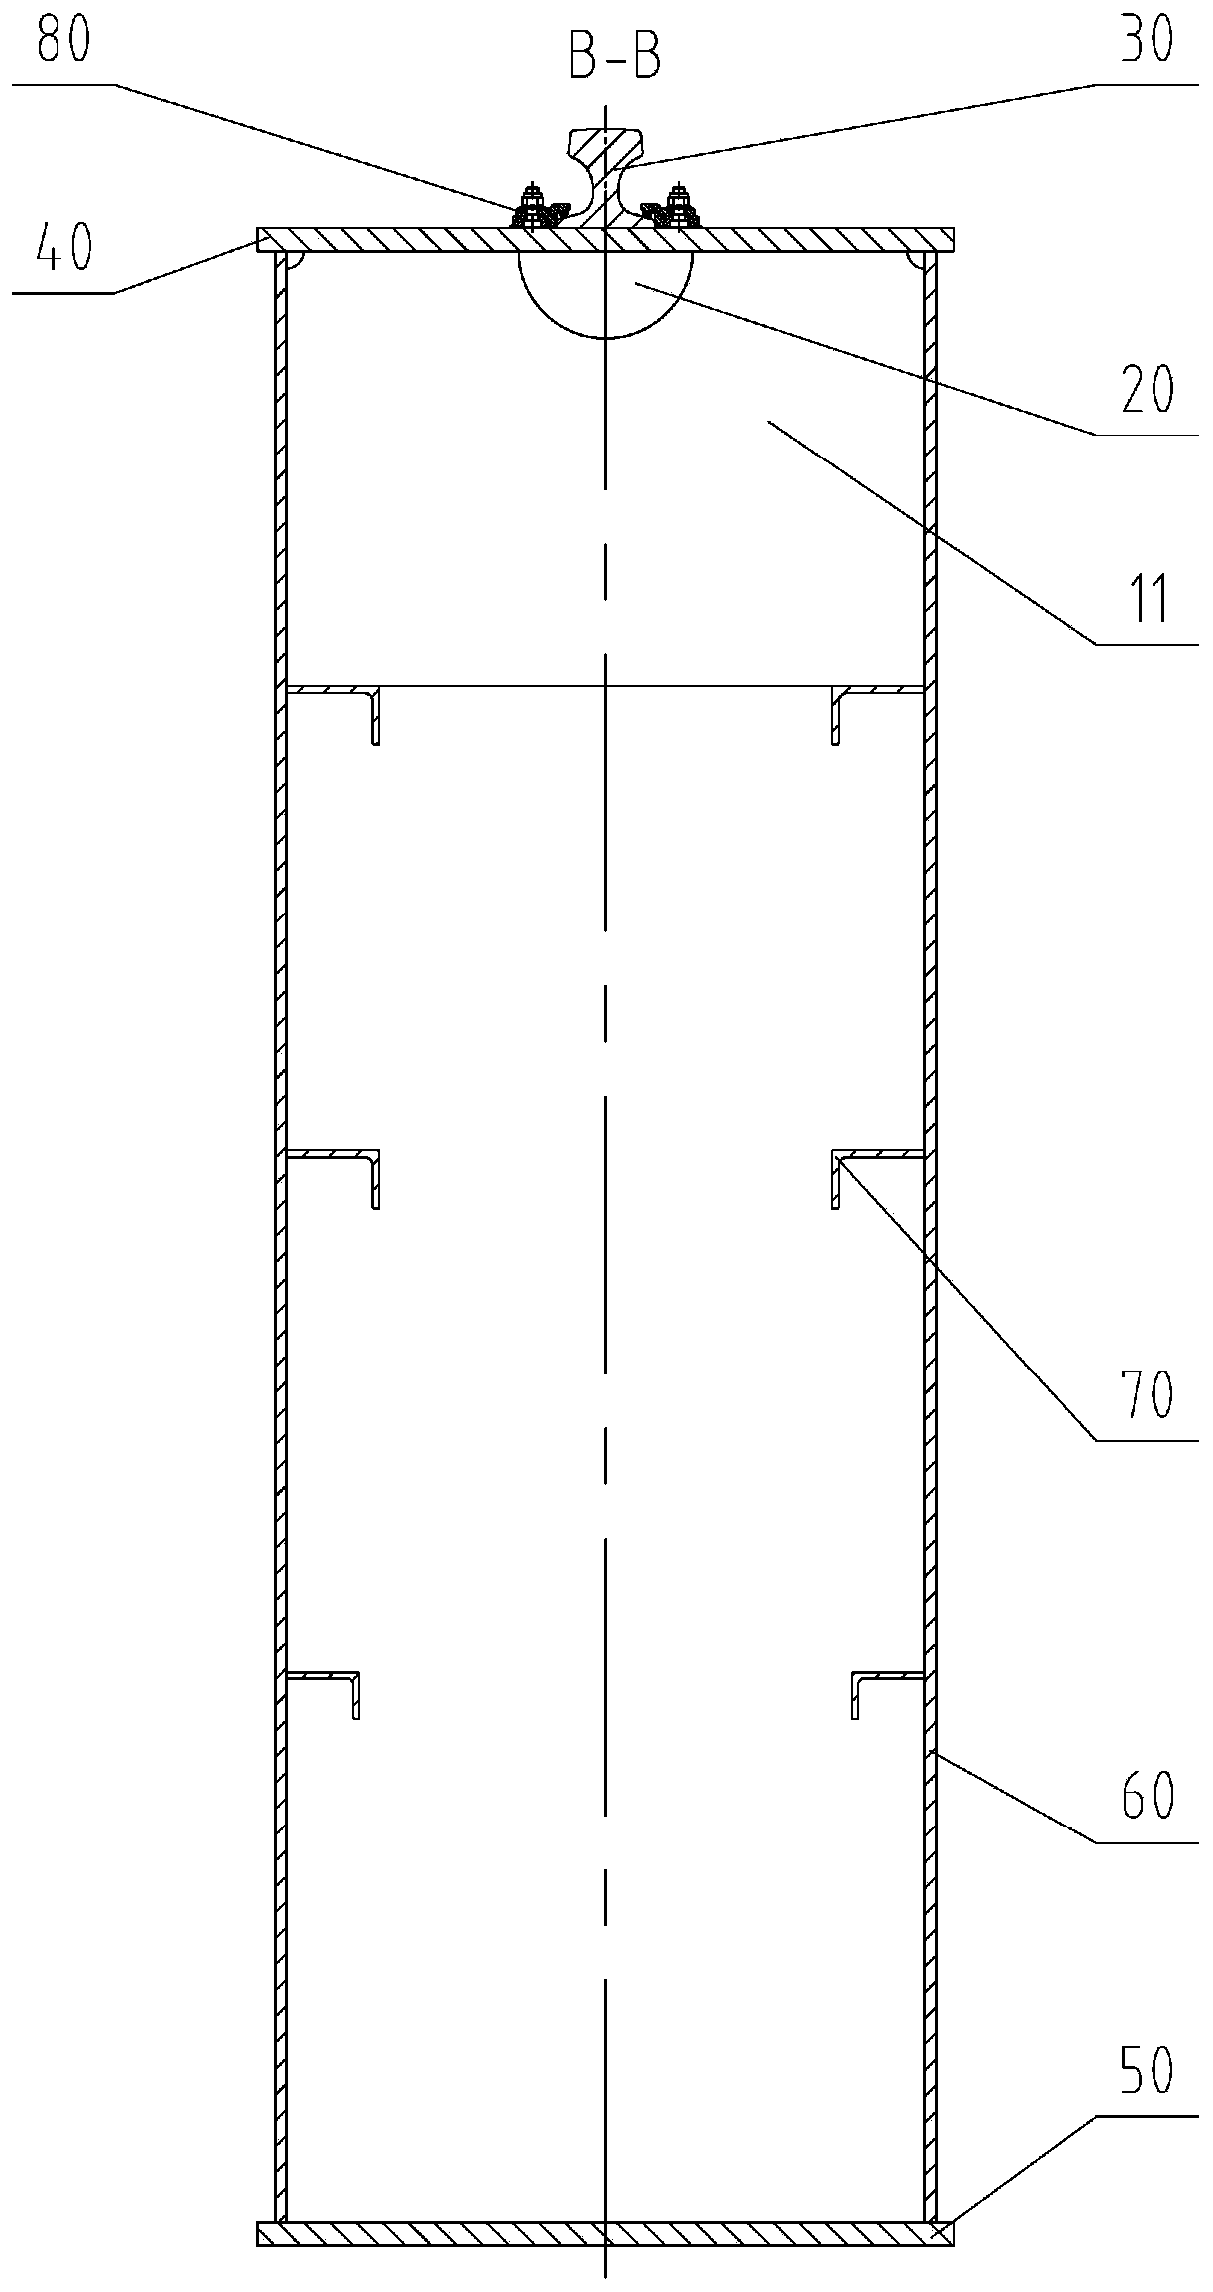 Manufacturing method of middle rail box girder of large tonnage bridge crane